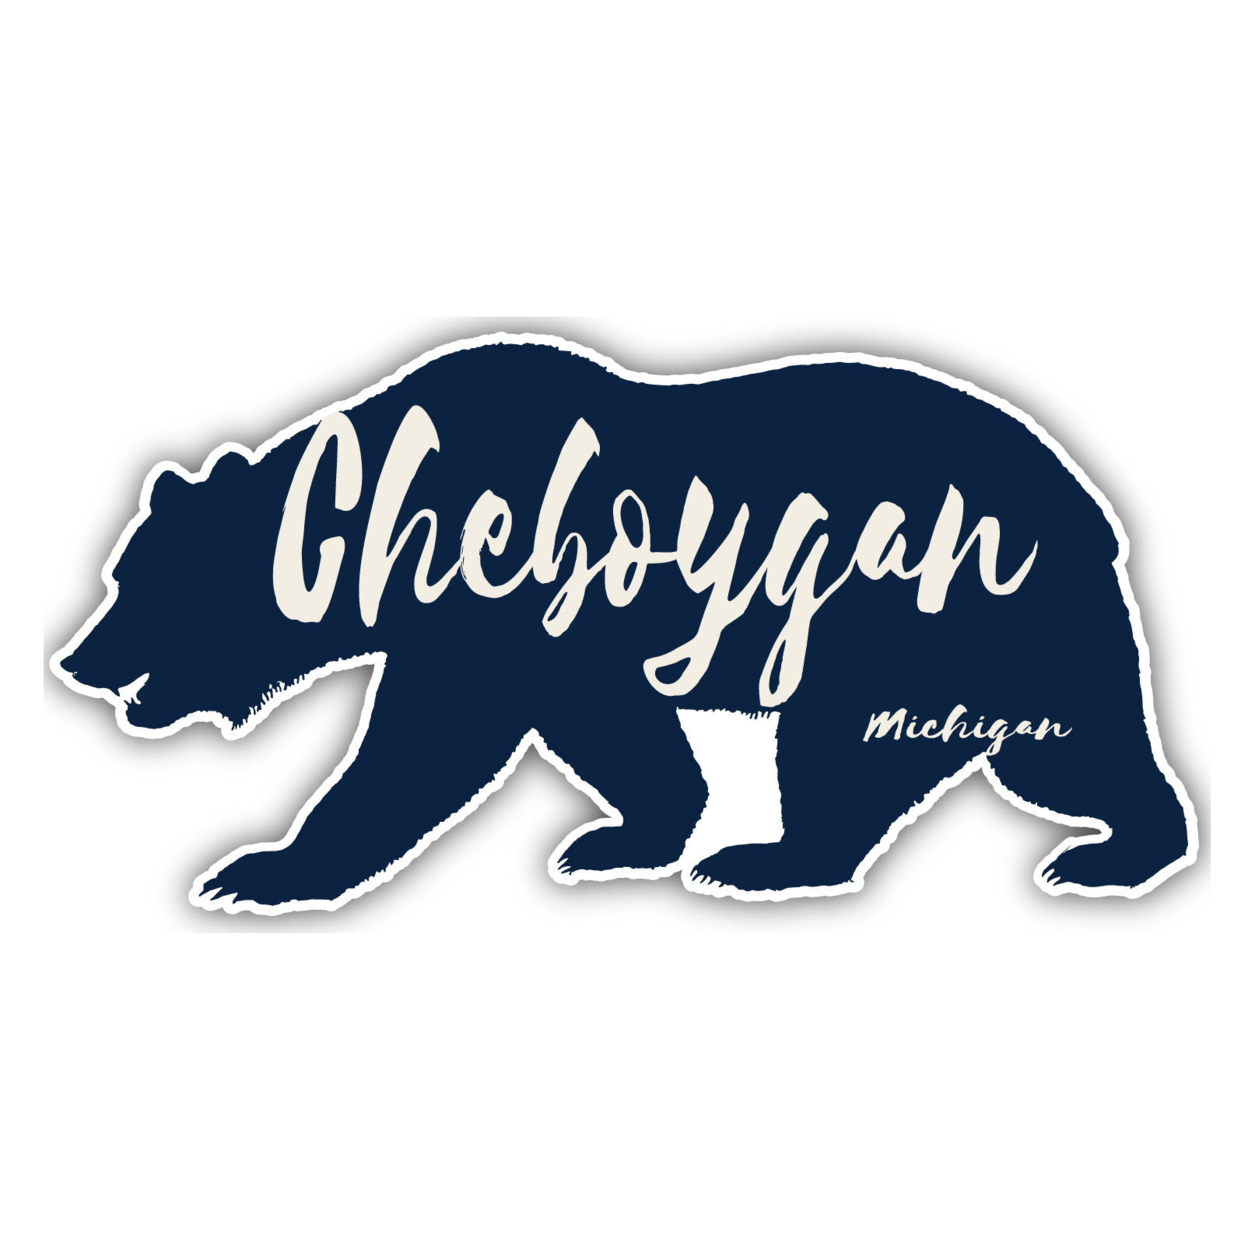 Cheboygan Michigan Souvenir Decorative Stickers (Choose Theme And Size) - Single Unit, 4-Inch, Bear